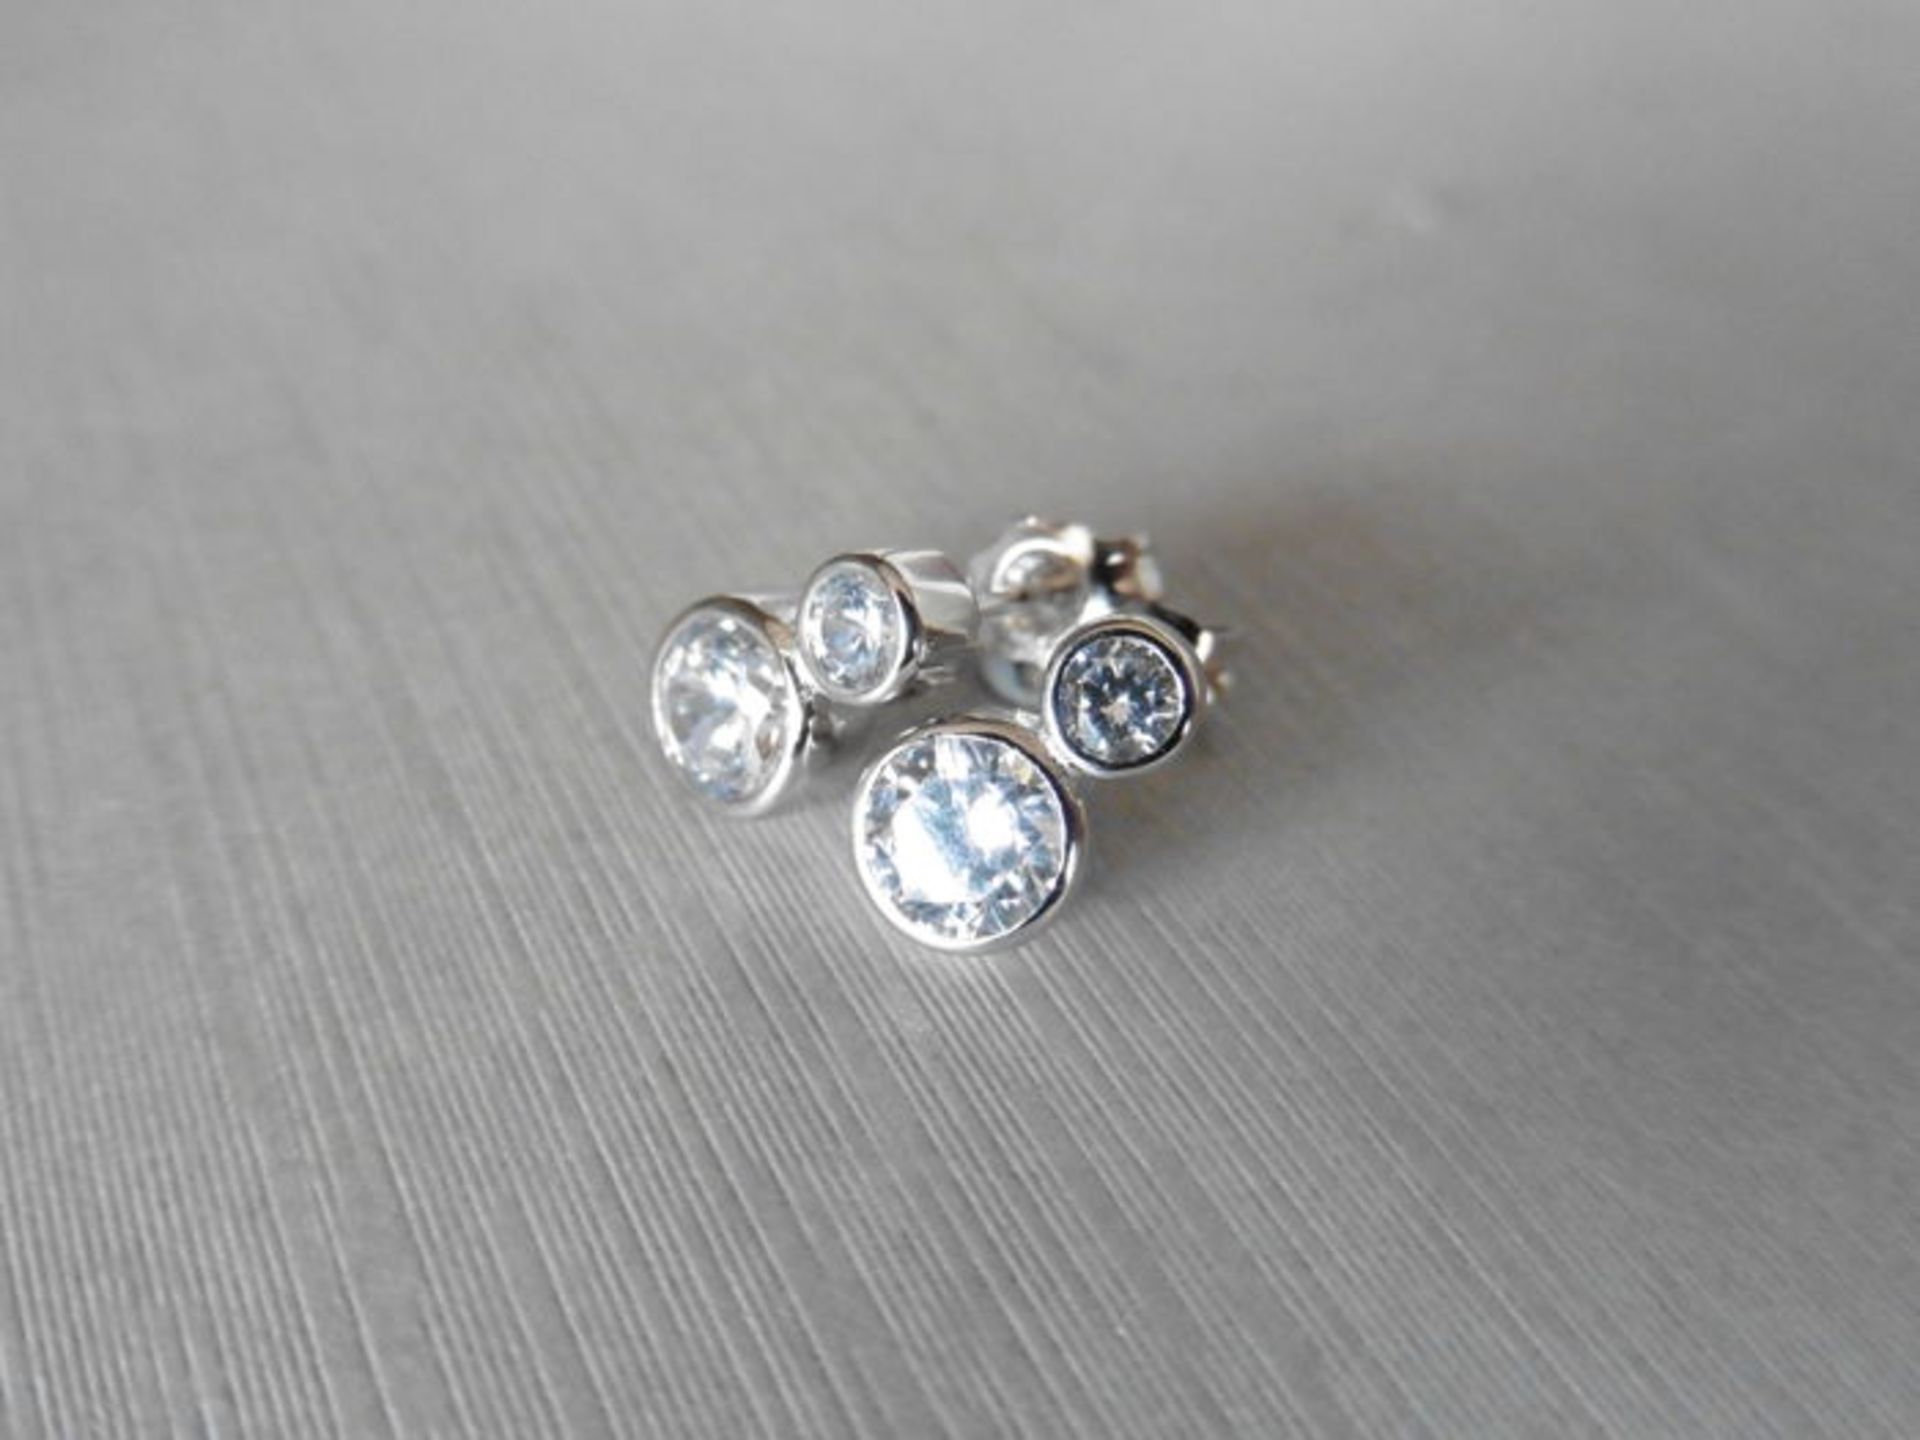 0.80ct diamond drop earrings each set with 2 graduated brilliant cut diamonds